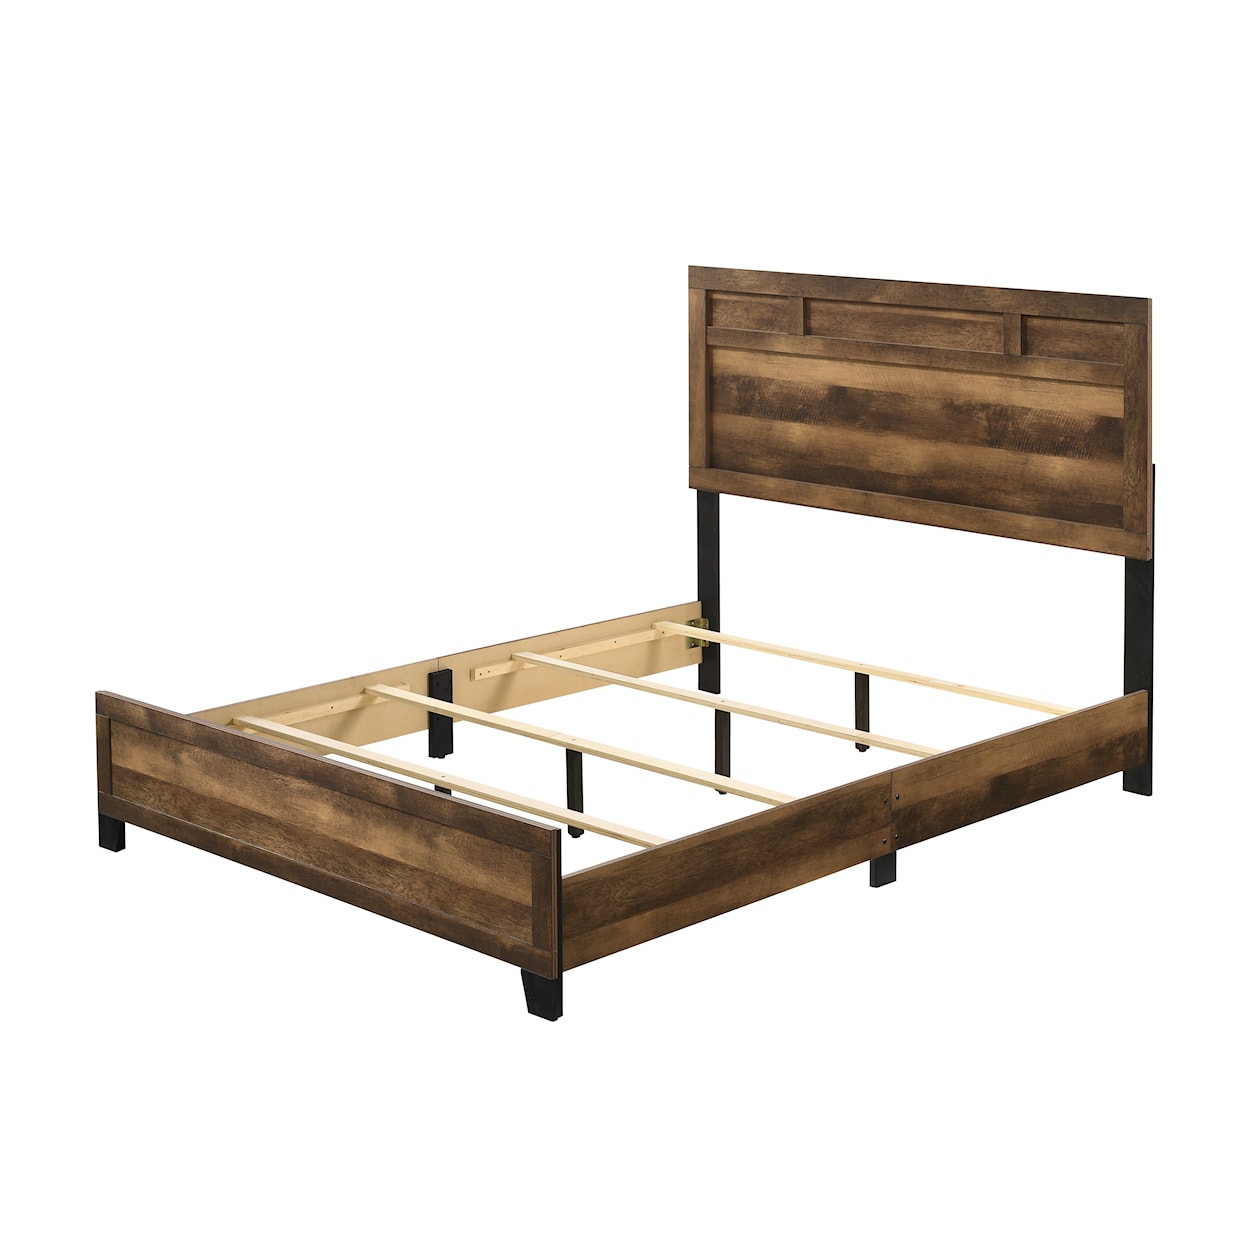 Acme Furniture Morales King Bed